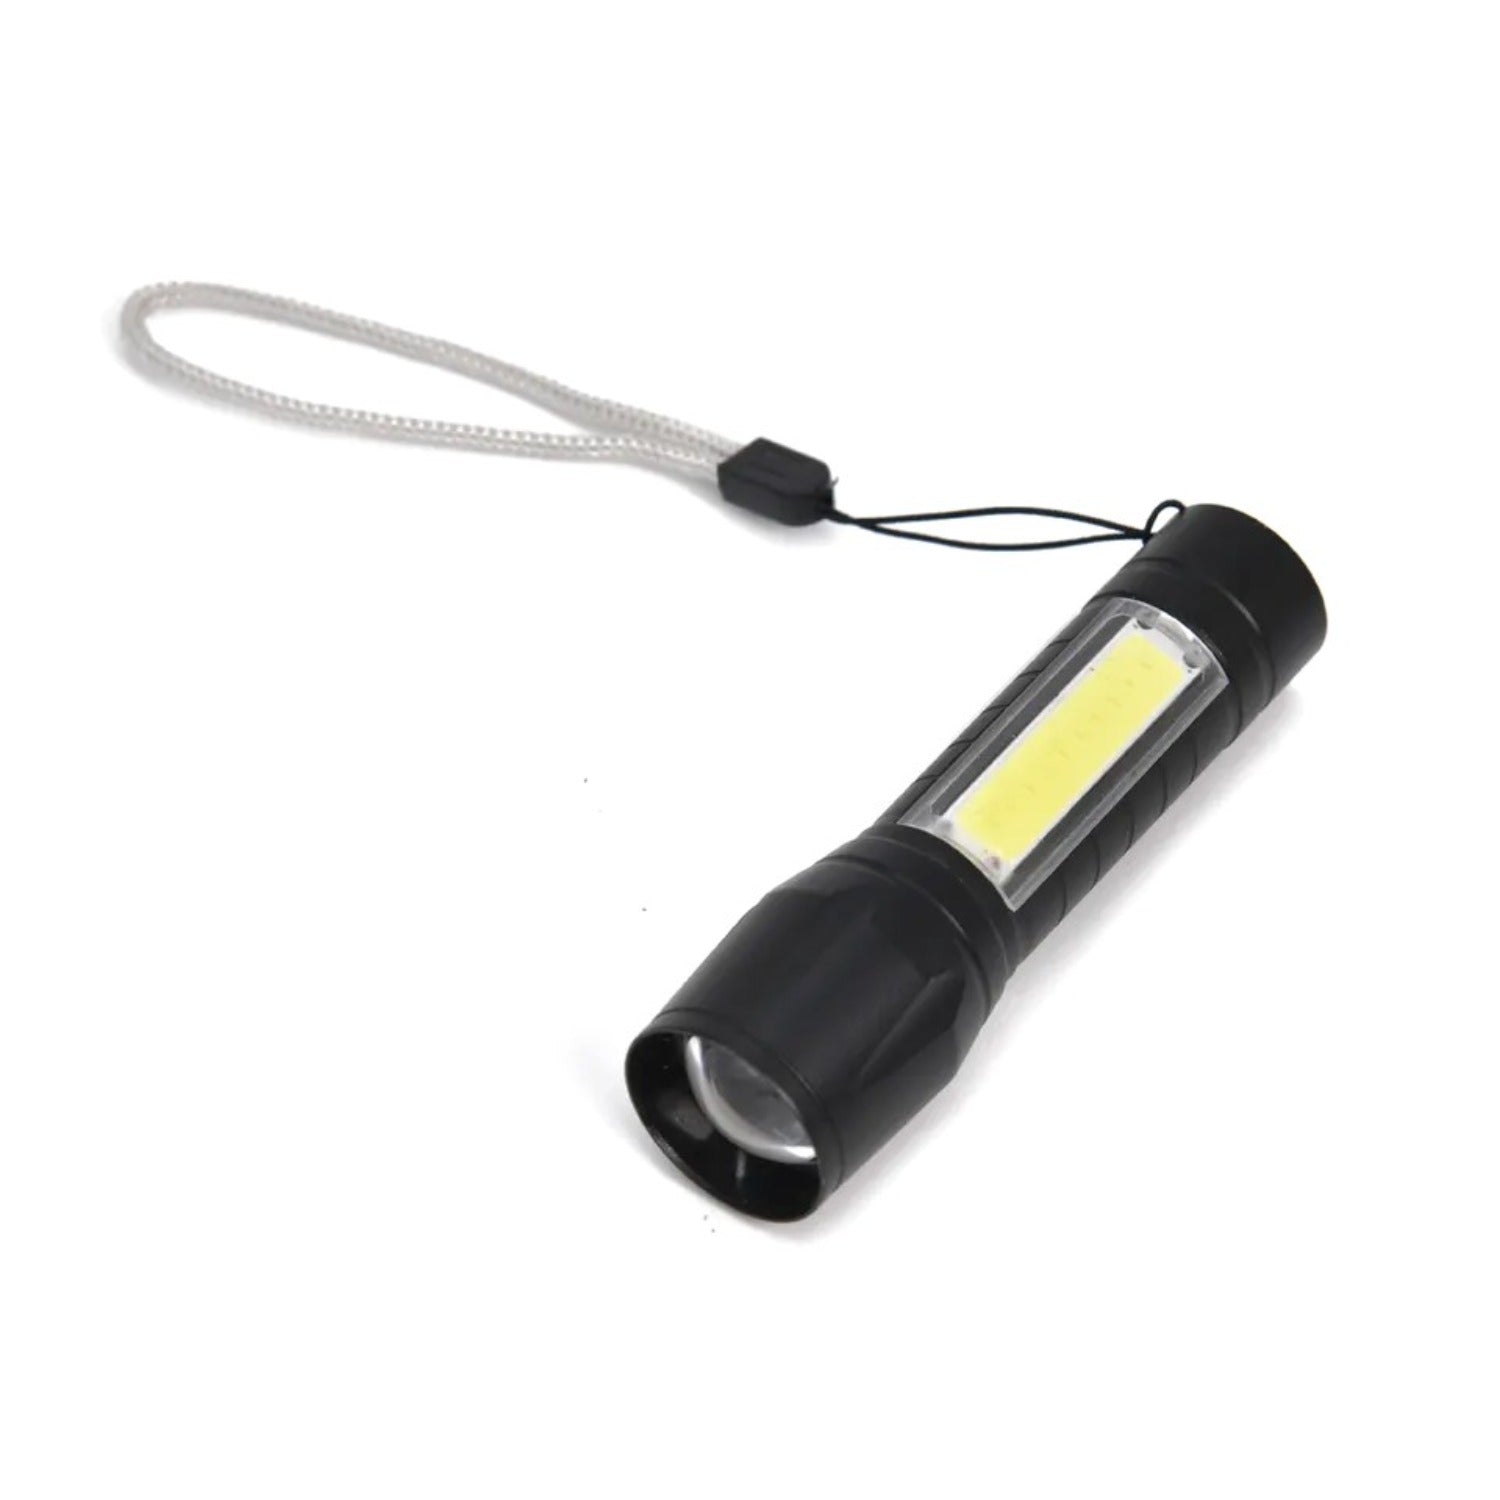 Buy Gokyo Kalimpong Hand Torch Lightweight 4 mode USB | Headlamp at Gokyo Outdoor Clothing & Gear